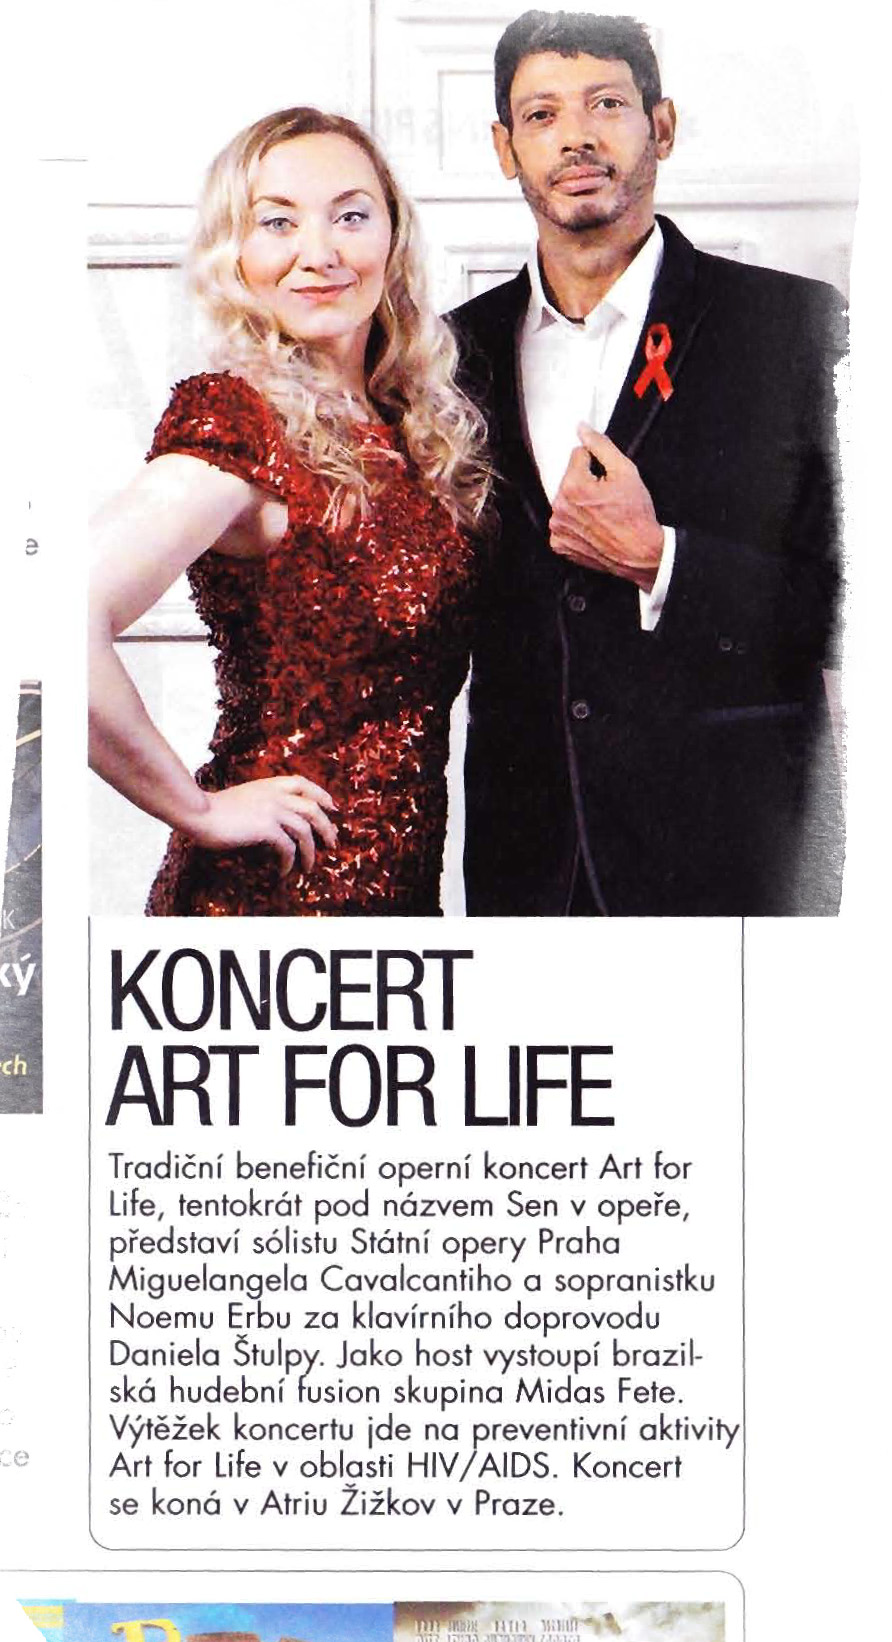 Short Announcement in 'Lovestar" - Czech monthly magazine. Oct 2012 Noema Erba, sopran & Miguelangelo Cavalcanti, baritone for 'Art for Life 2012'